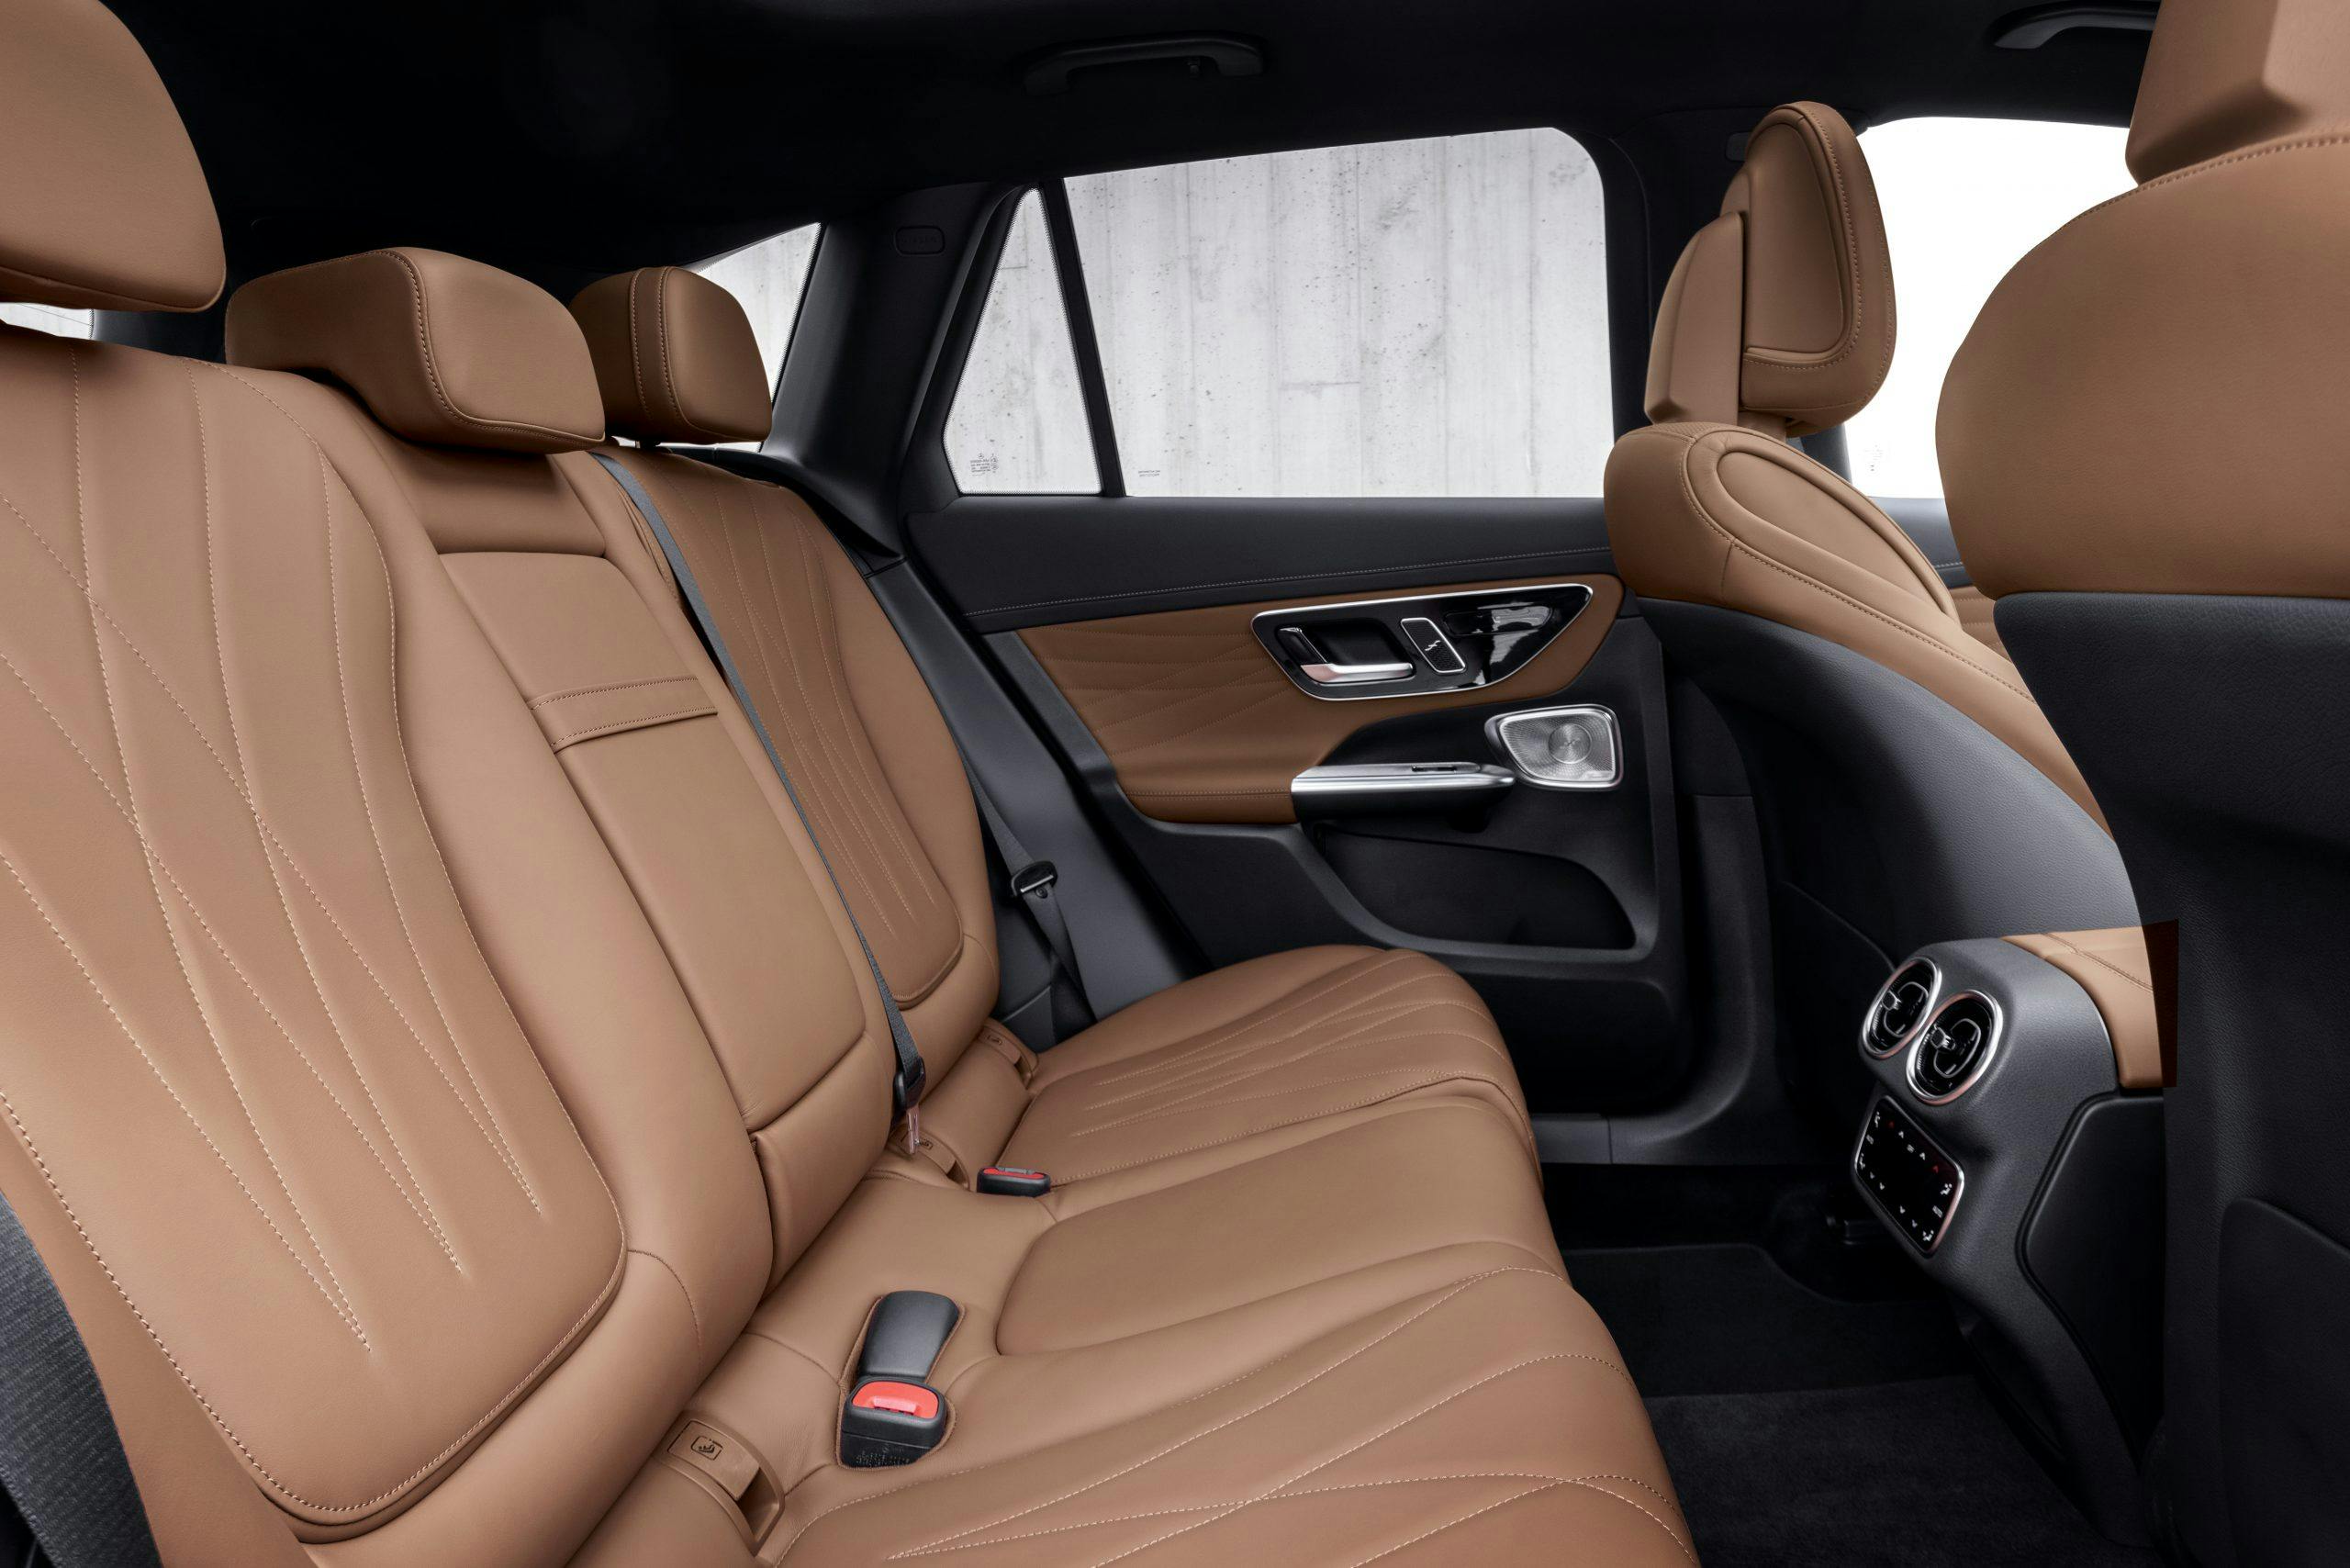 Mercedes-Benz GLC SUV interior rear seat